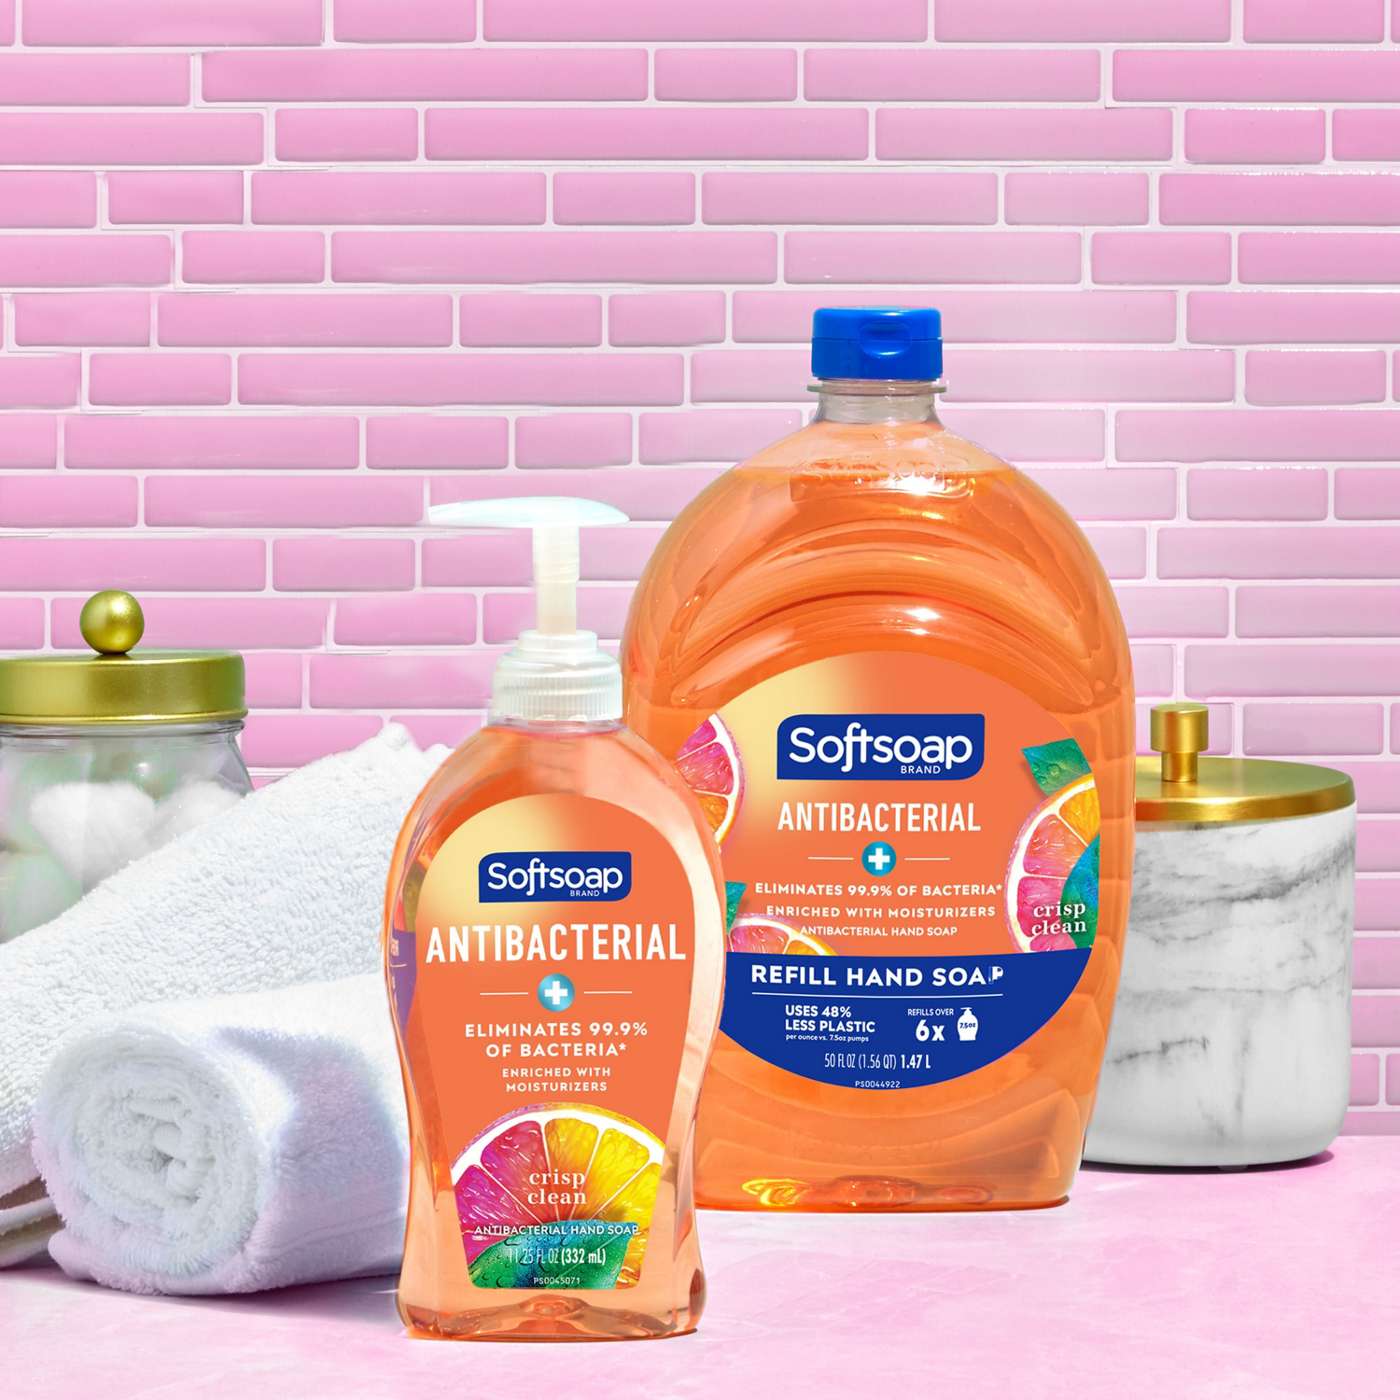 Softsoap Antibacterial Hand Soap Refill - Crisp Clean; image 7 of 8